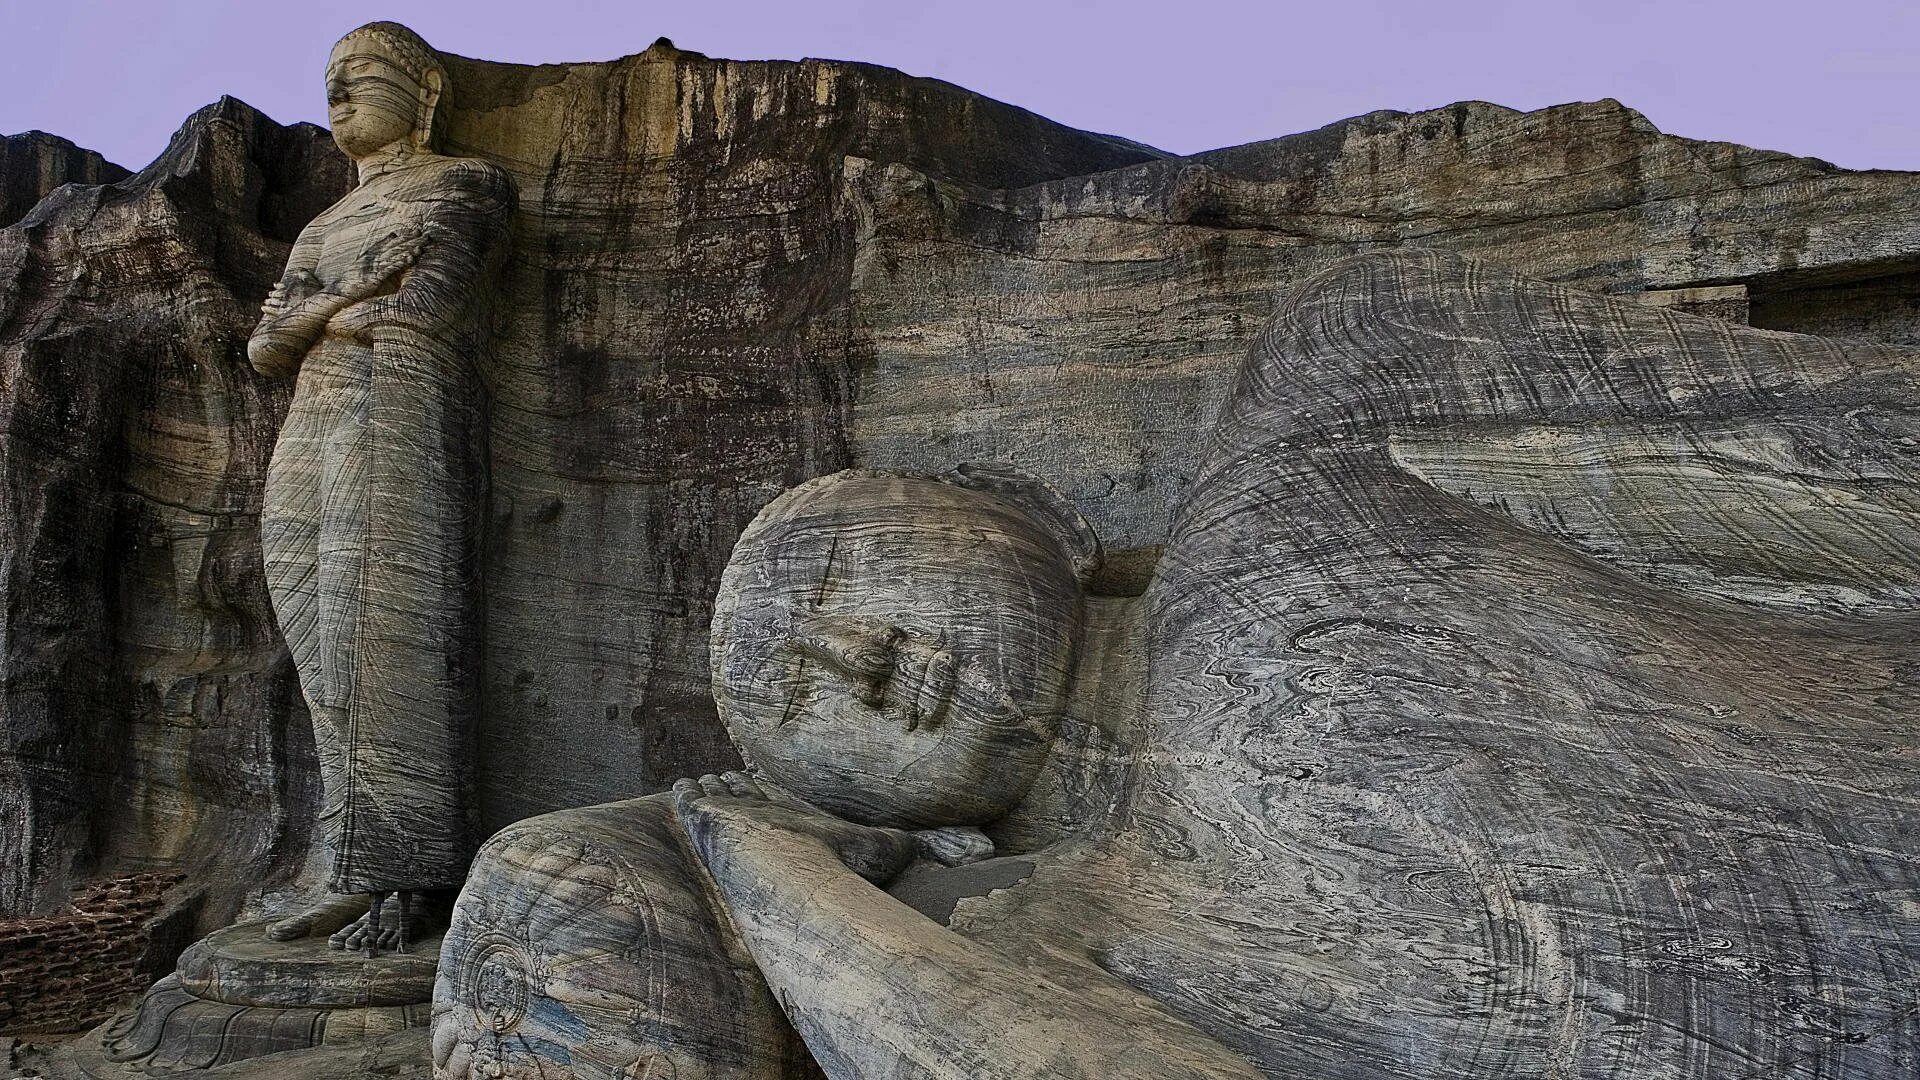 Храм Гал Вихара Шри-Ланка. Статуя Будды в Полоннарува. Каменный храм Гал Вихара. Каменные Будды в скале Шри Ланка. Древнейшая монументальная культовая скульптура